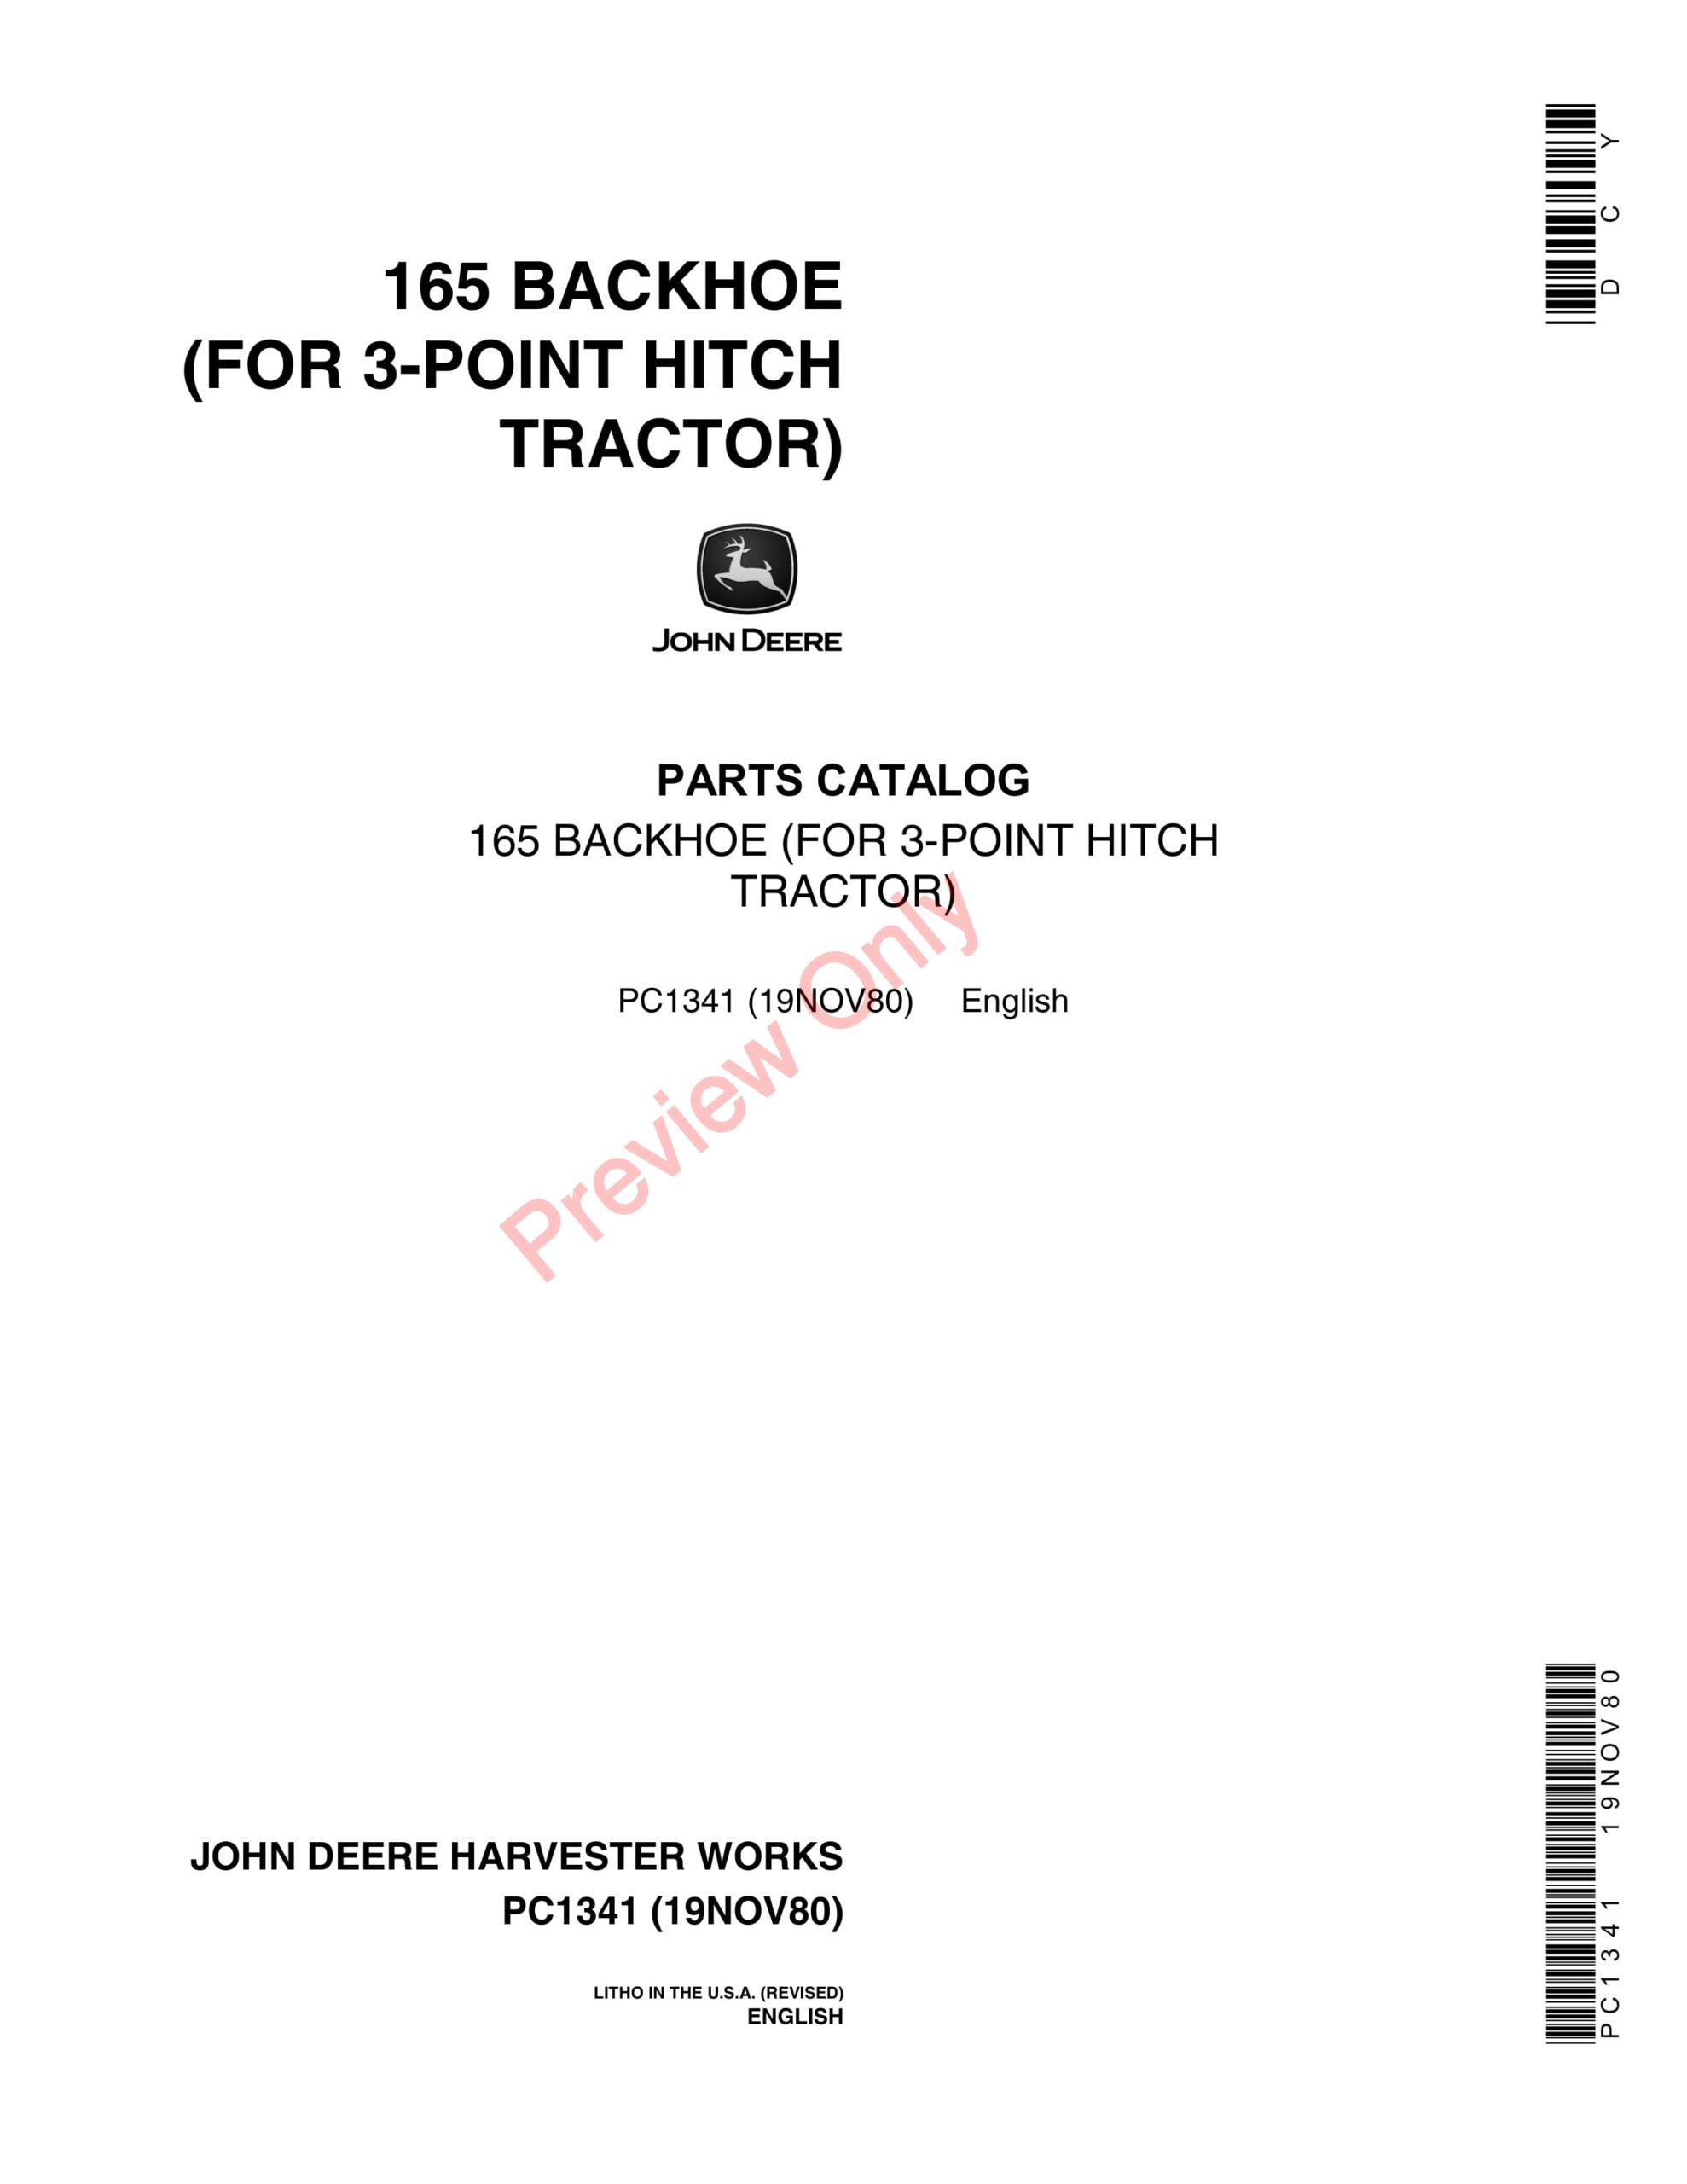 John Deere 165 Backhoe (Applies to 3-Point Hitch Tractors) Parts Catalog PC1341 19NOV80-1